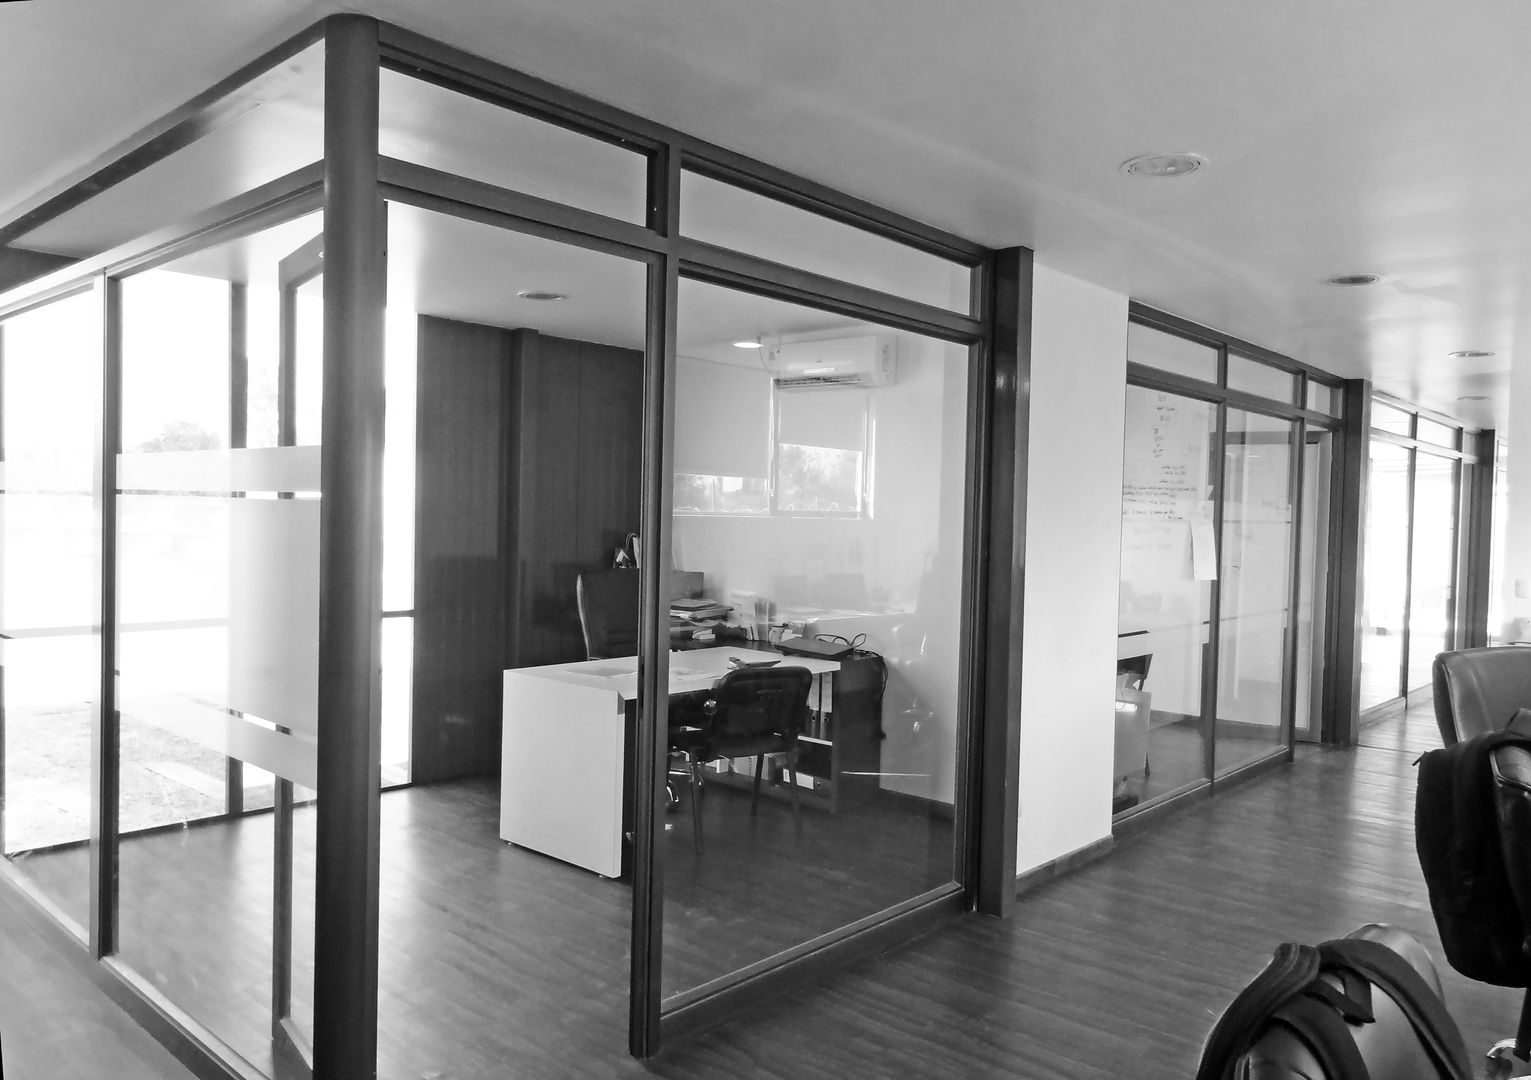 Oficinas Modulares Transportables, m2 estudio arquitectos - Santiago m2 estudio arquitectos - Santiago Media room